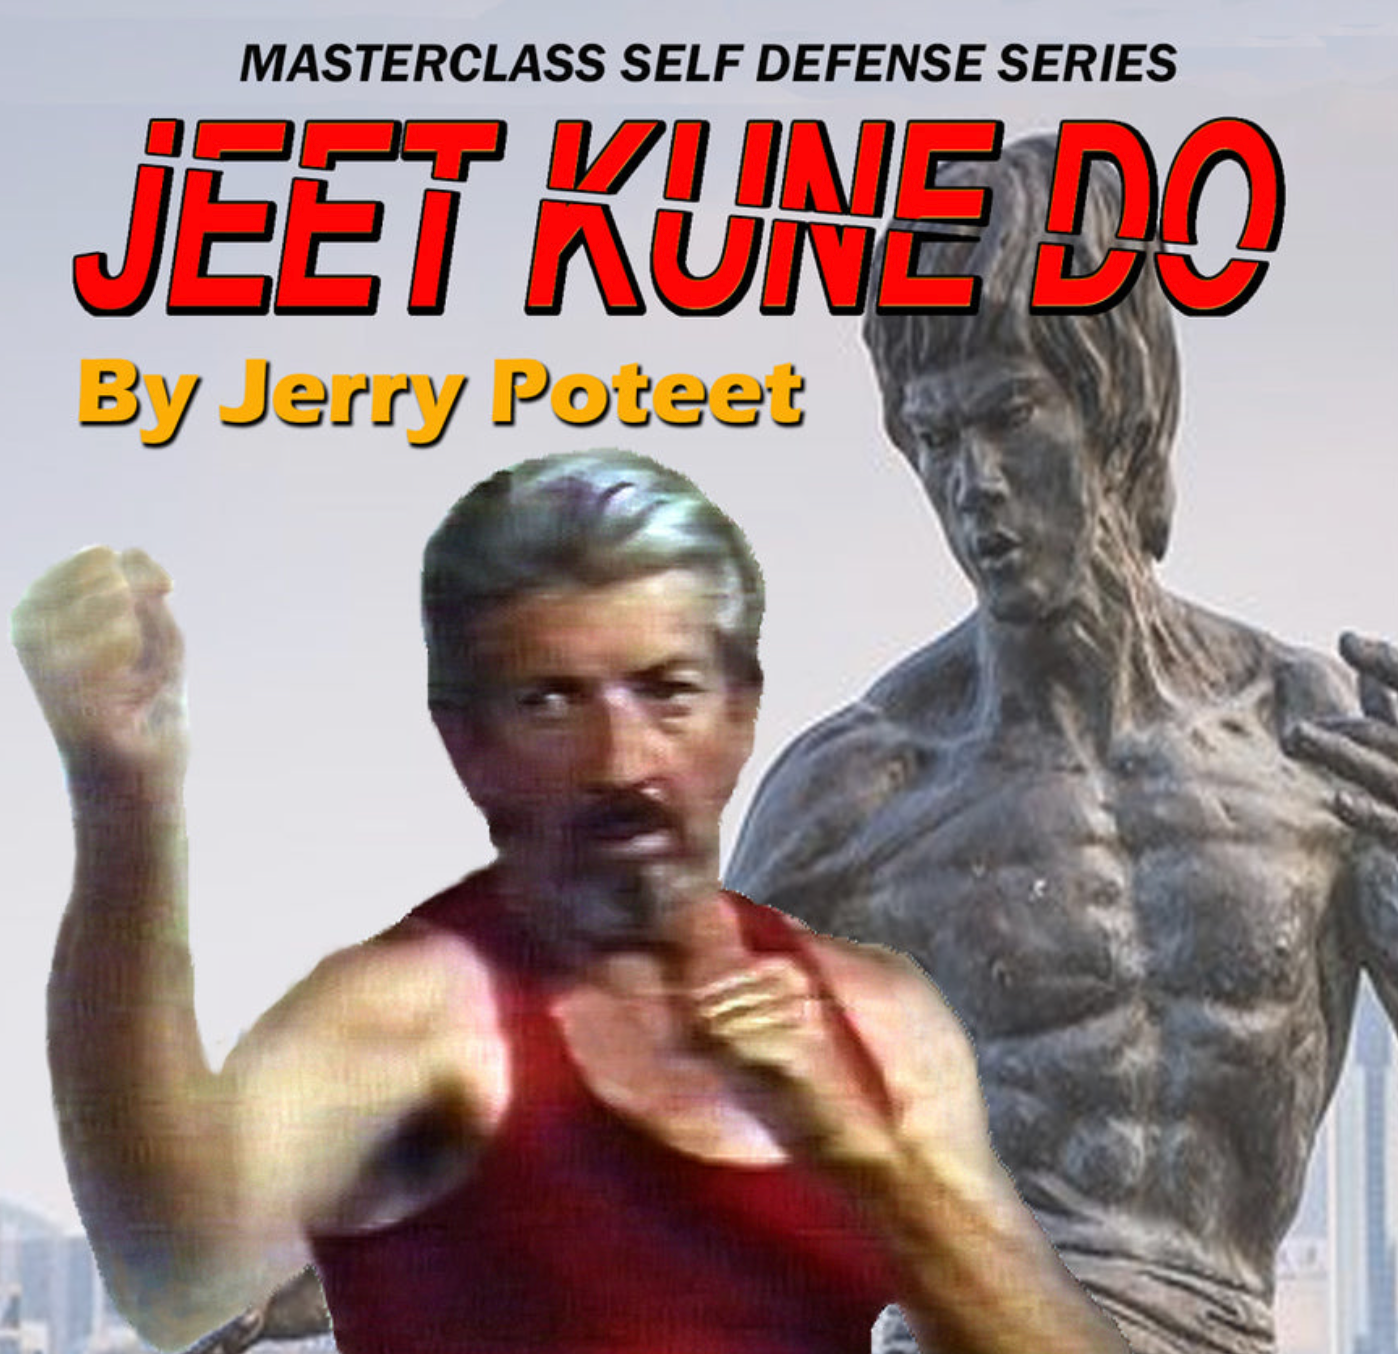 Jeet Kune Do 6 Vol シリーズ by Jerry Poteet (オンデマンド)